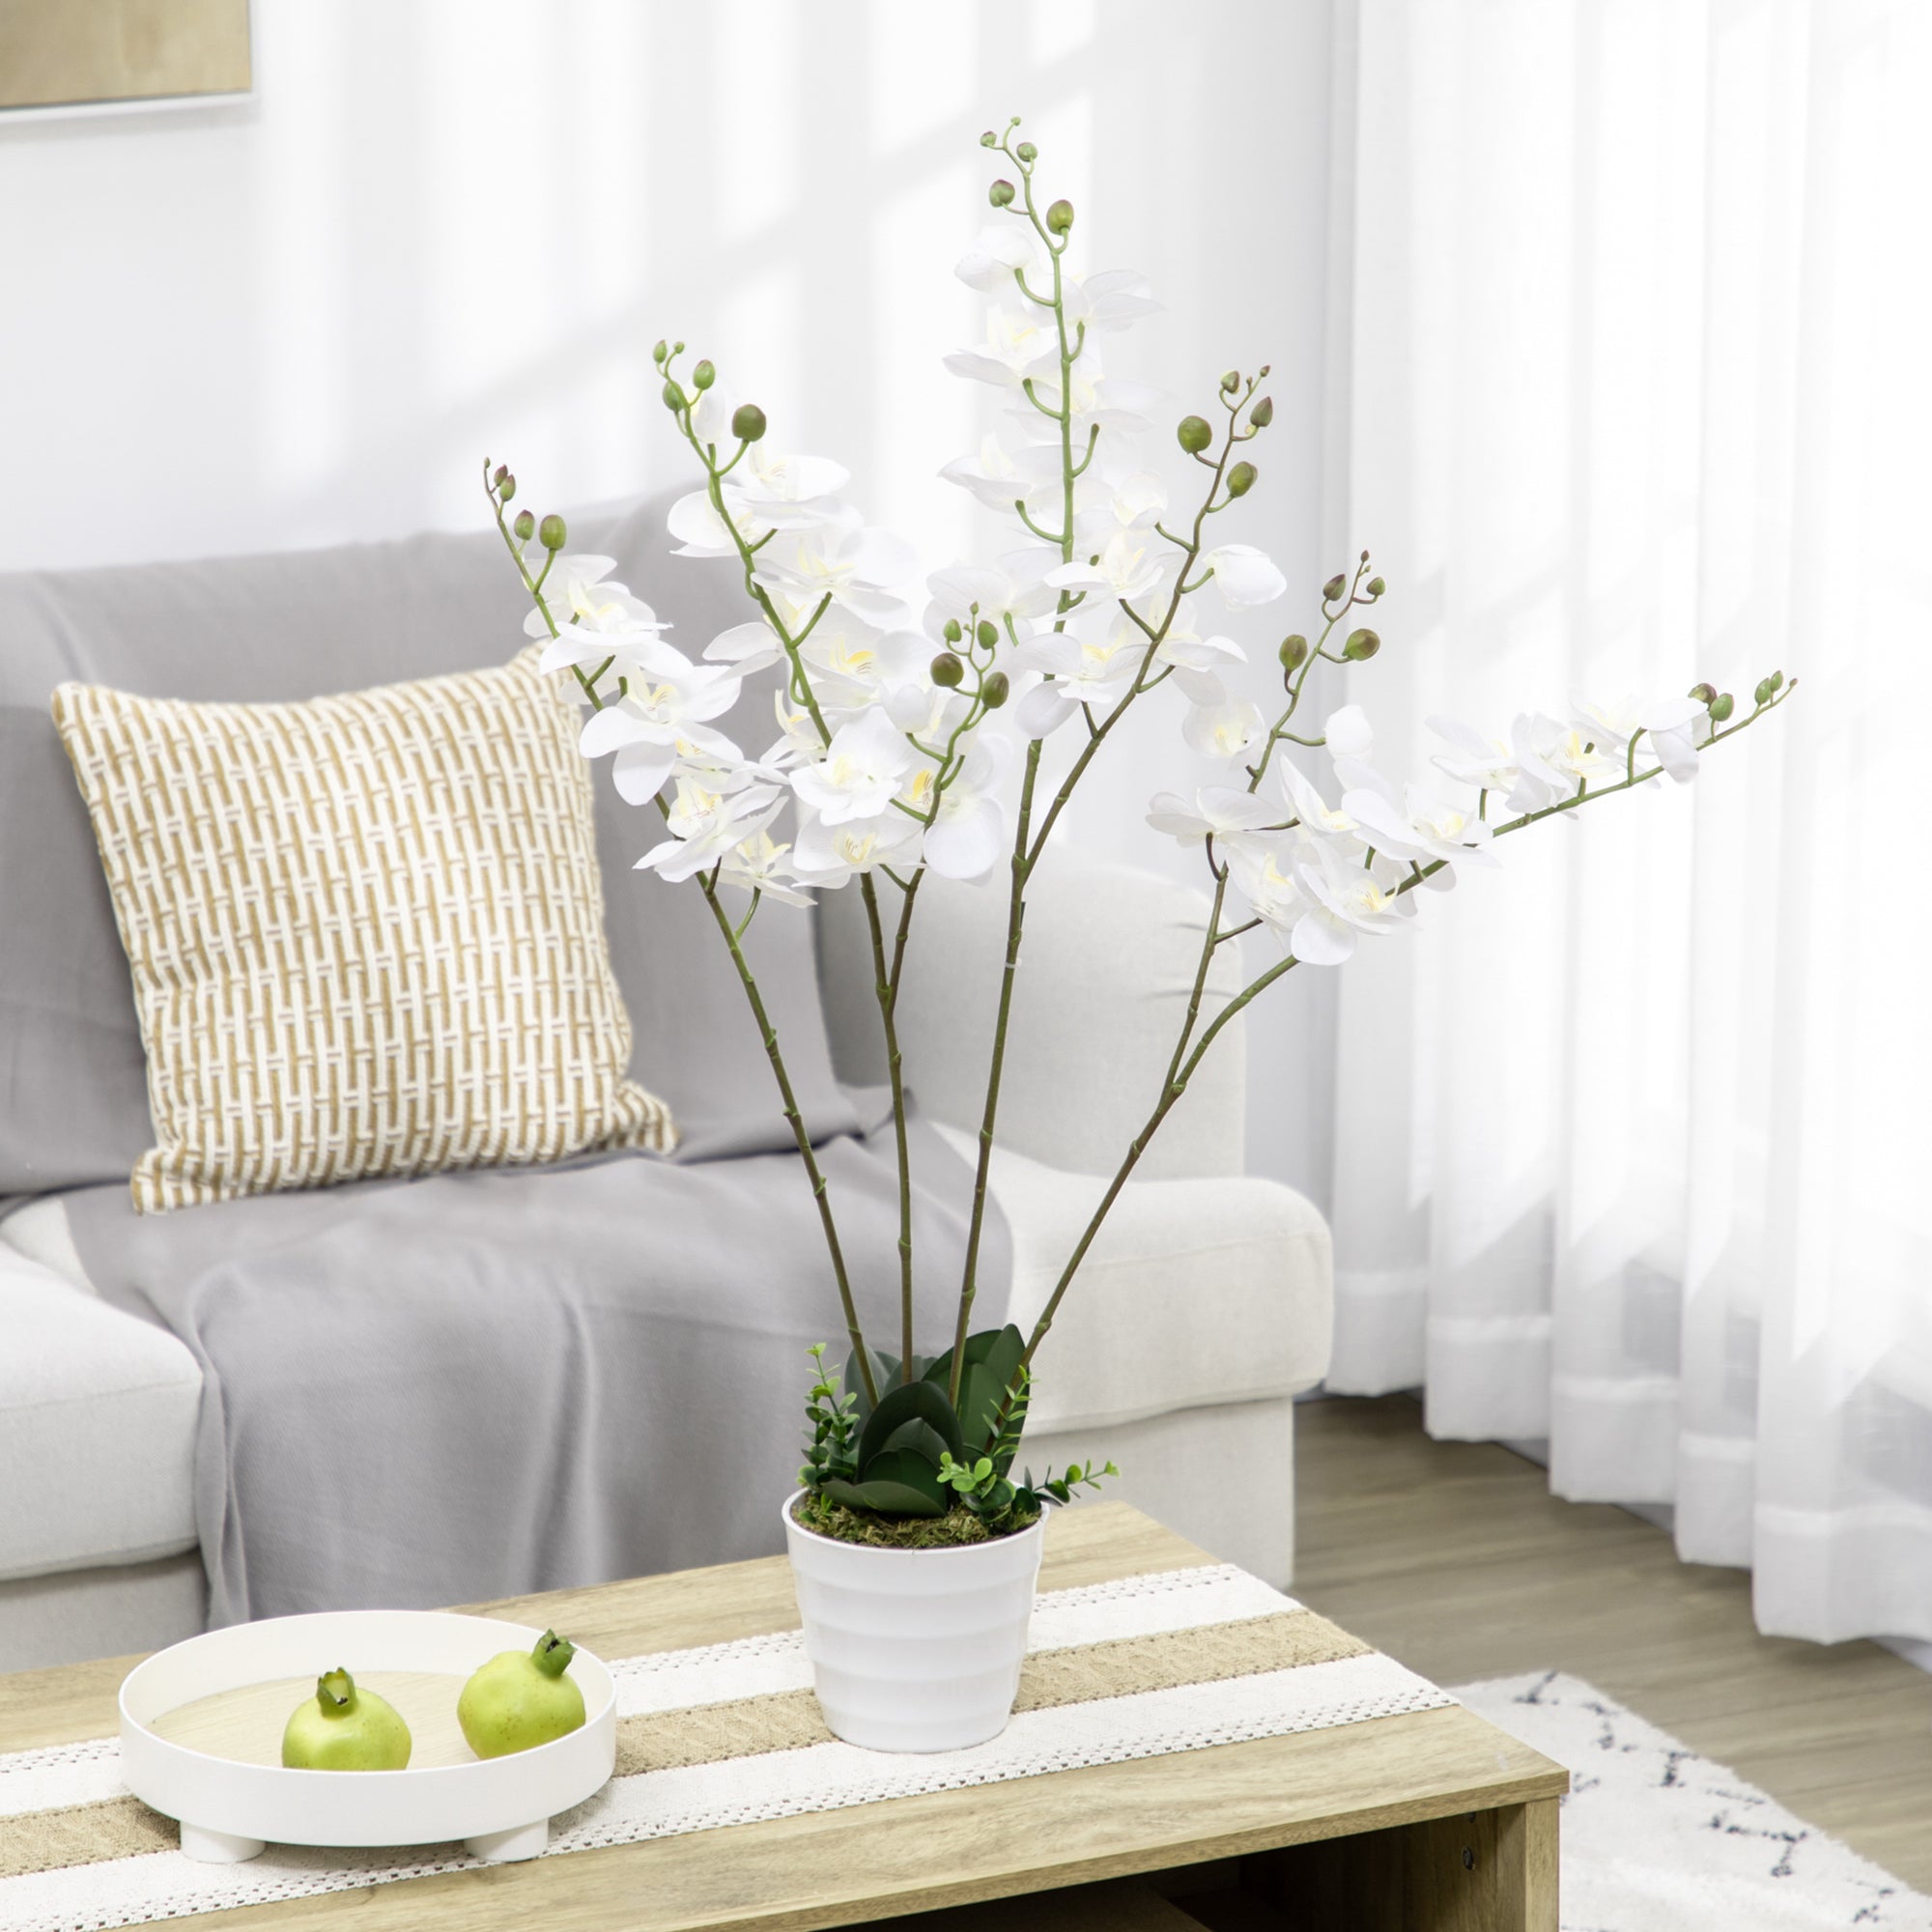 Pianta Artificiale Orchidea H75 cm con Vaso Bianco